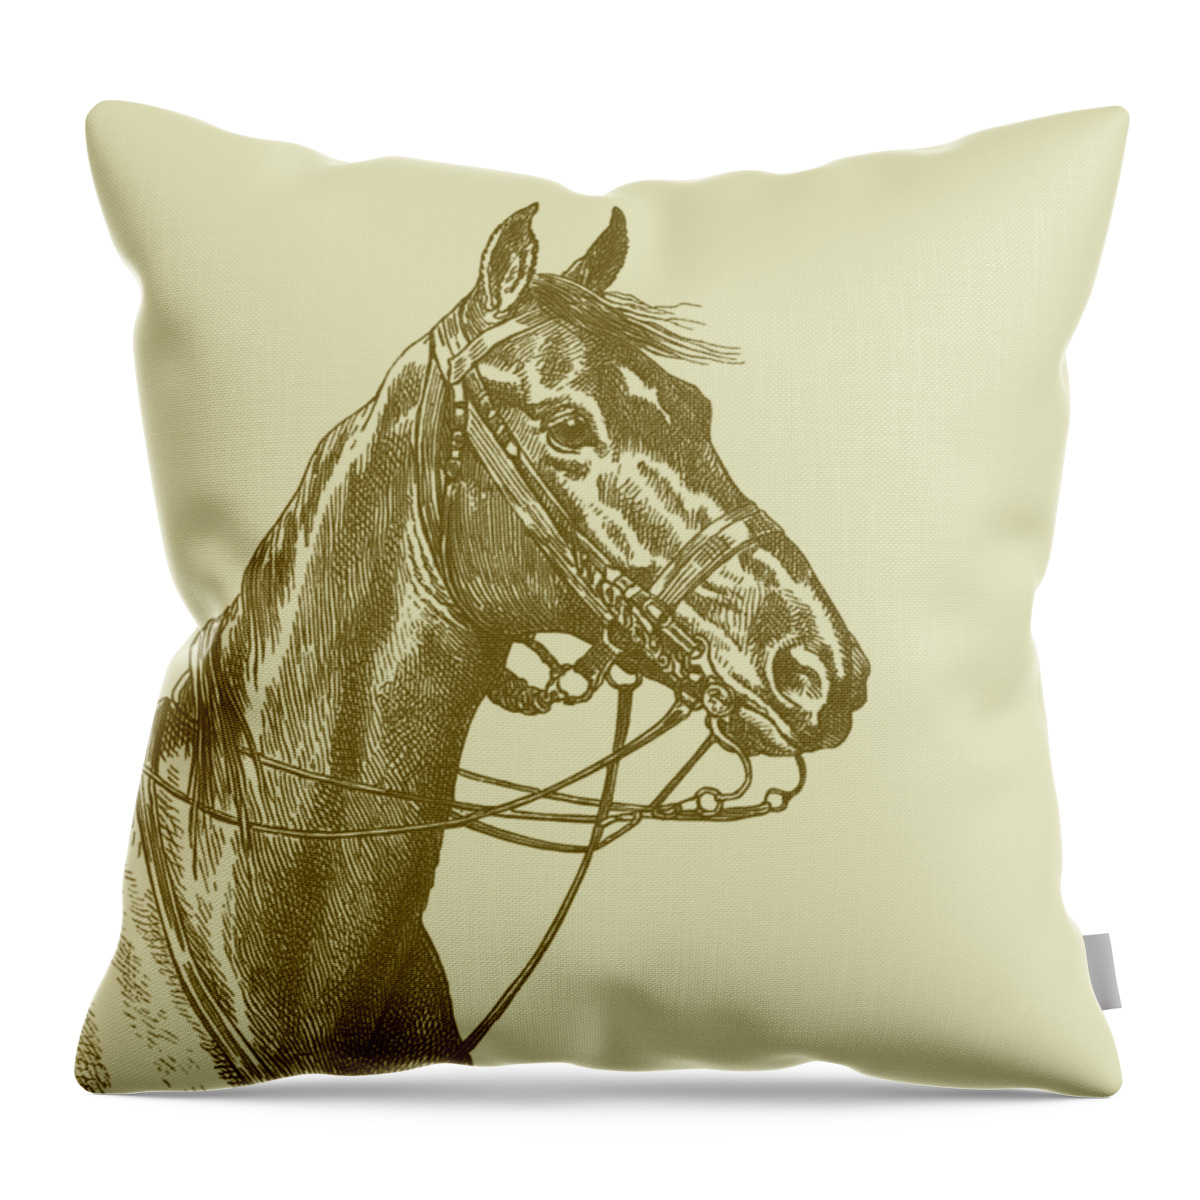 Horse Throw Pillow featuring the digital art Horse Portrait Line Art by Madame Memento